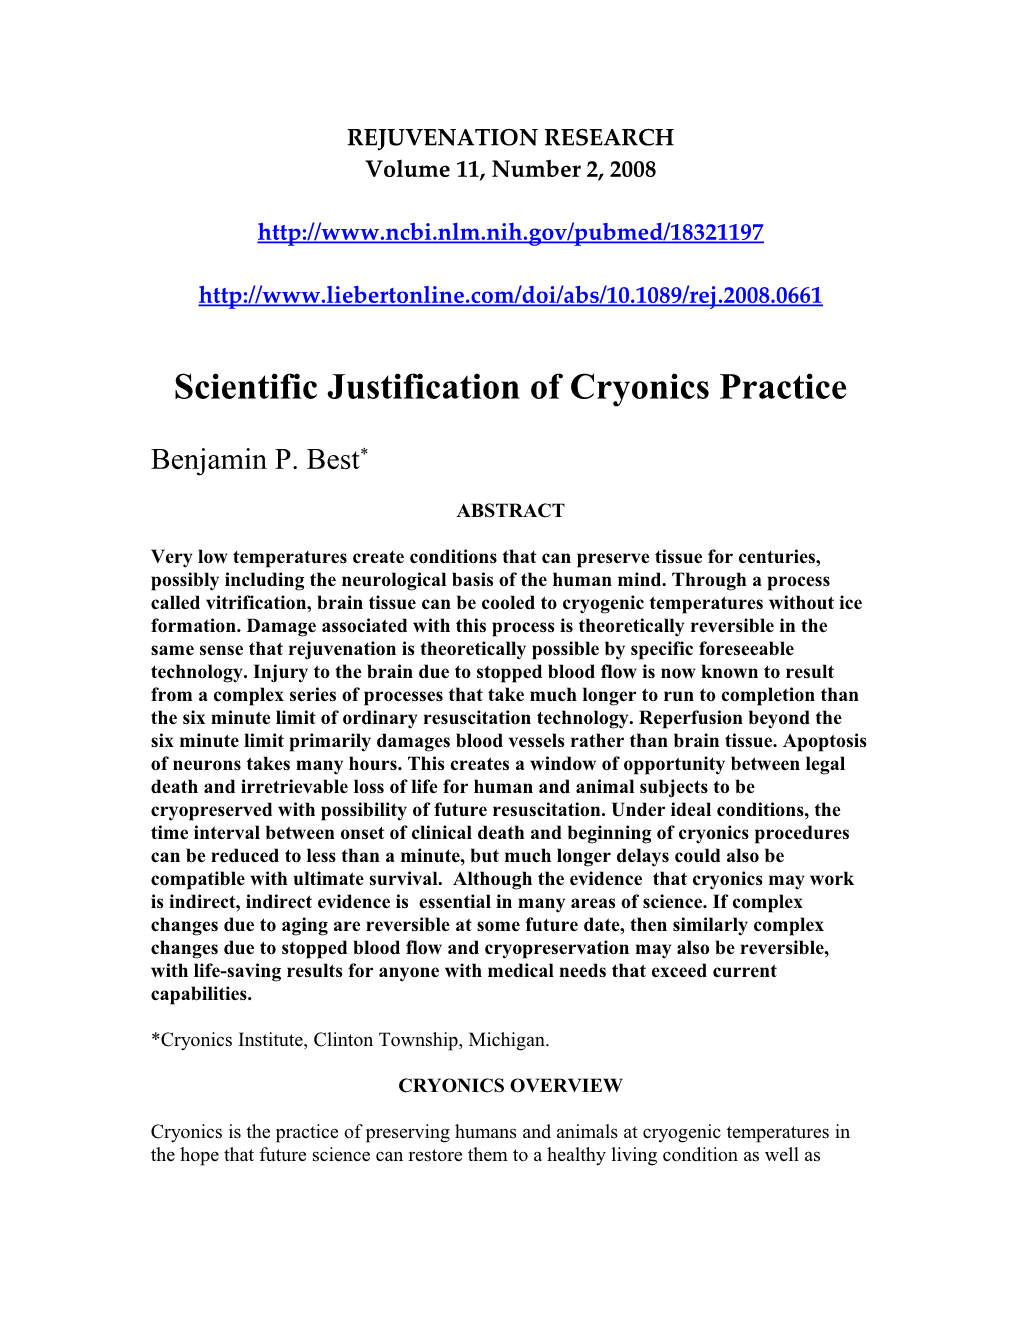 Scientific Justification of Cryonics Practice